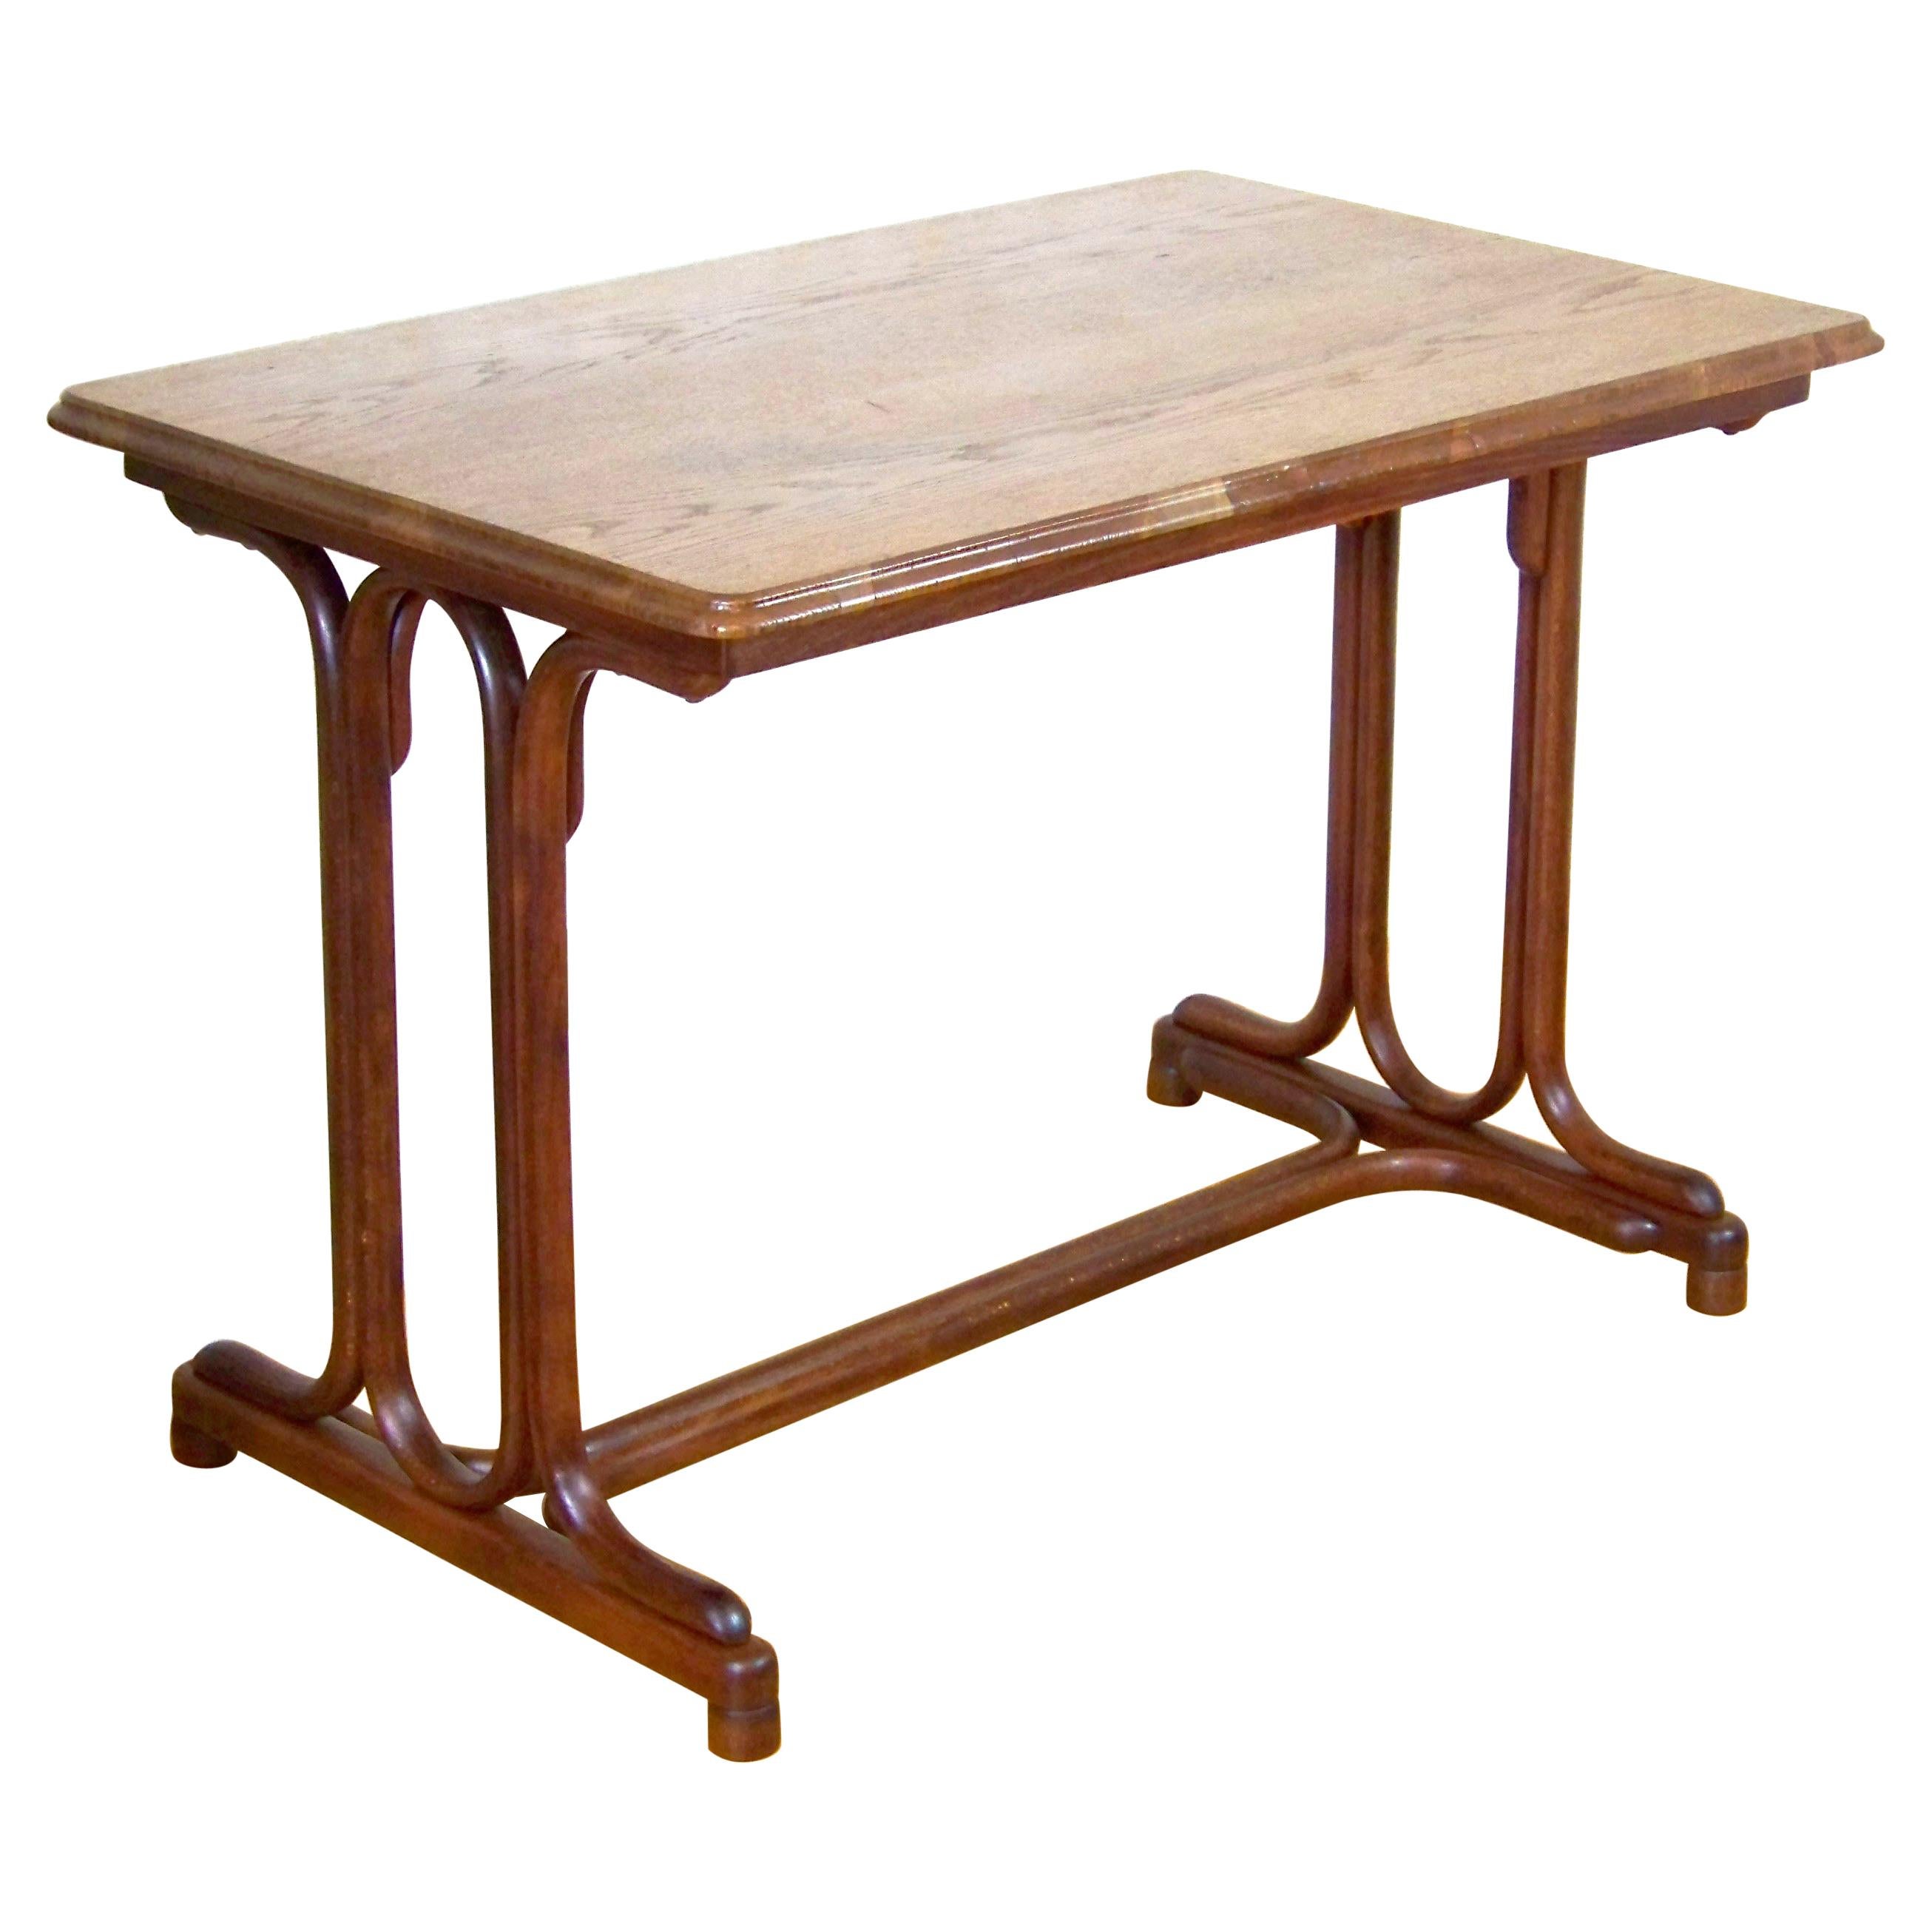 Table Thonet Nr.12, since 1888